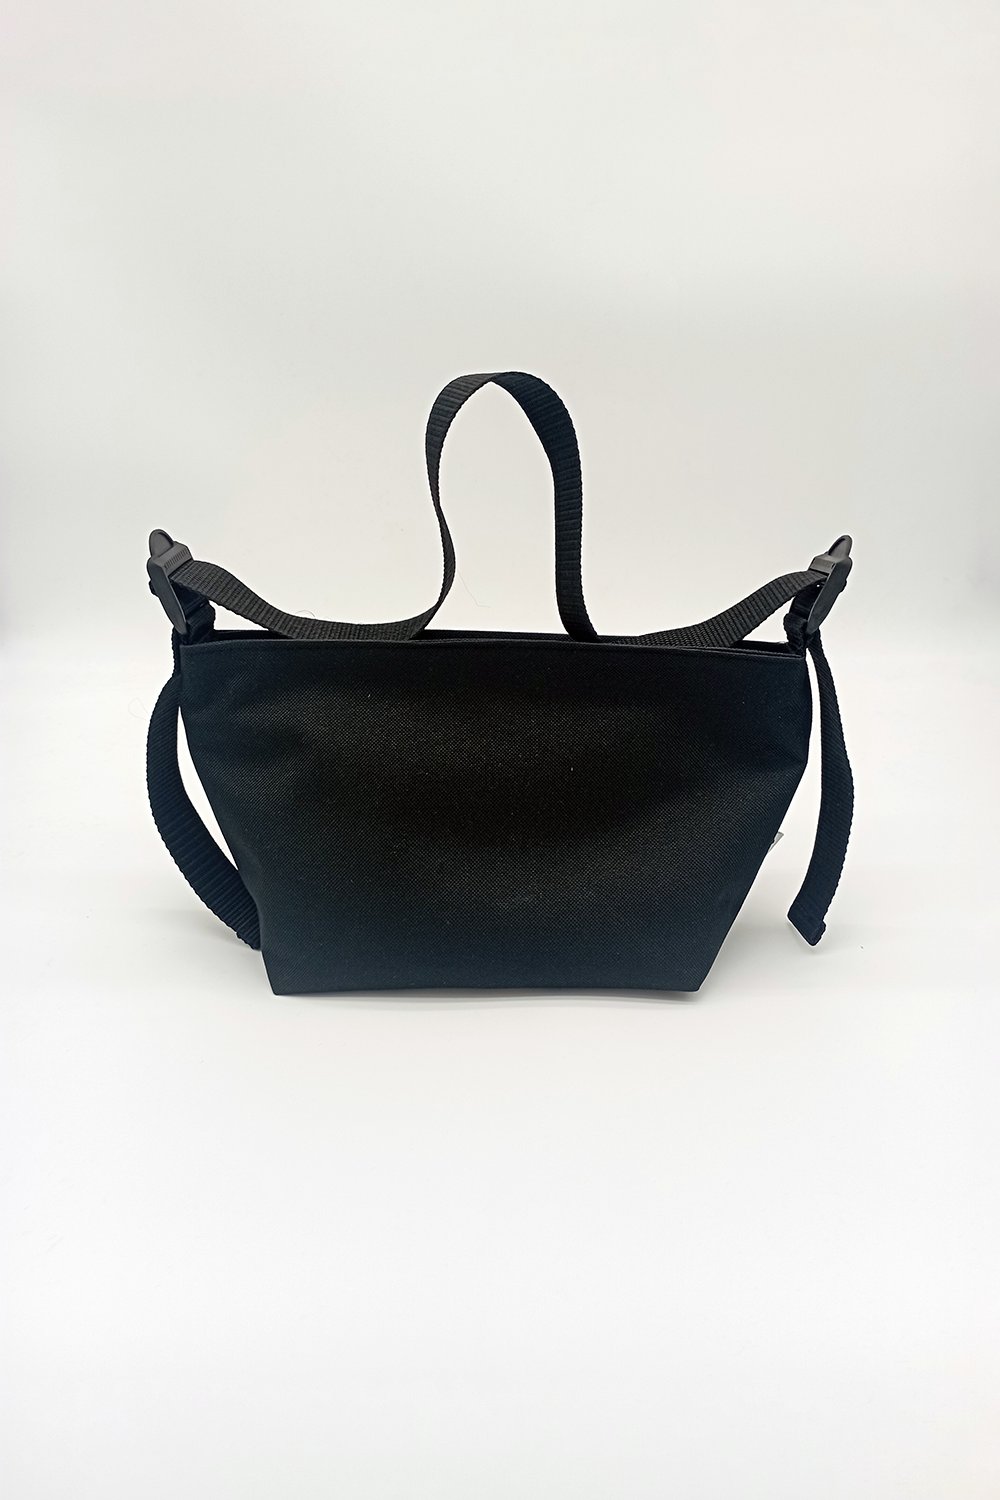 Image of CLOE - mini bag black